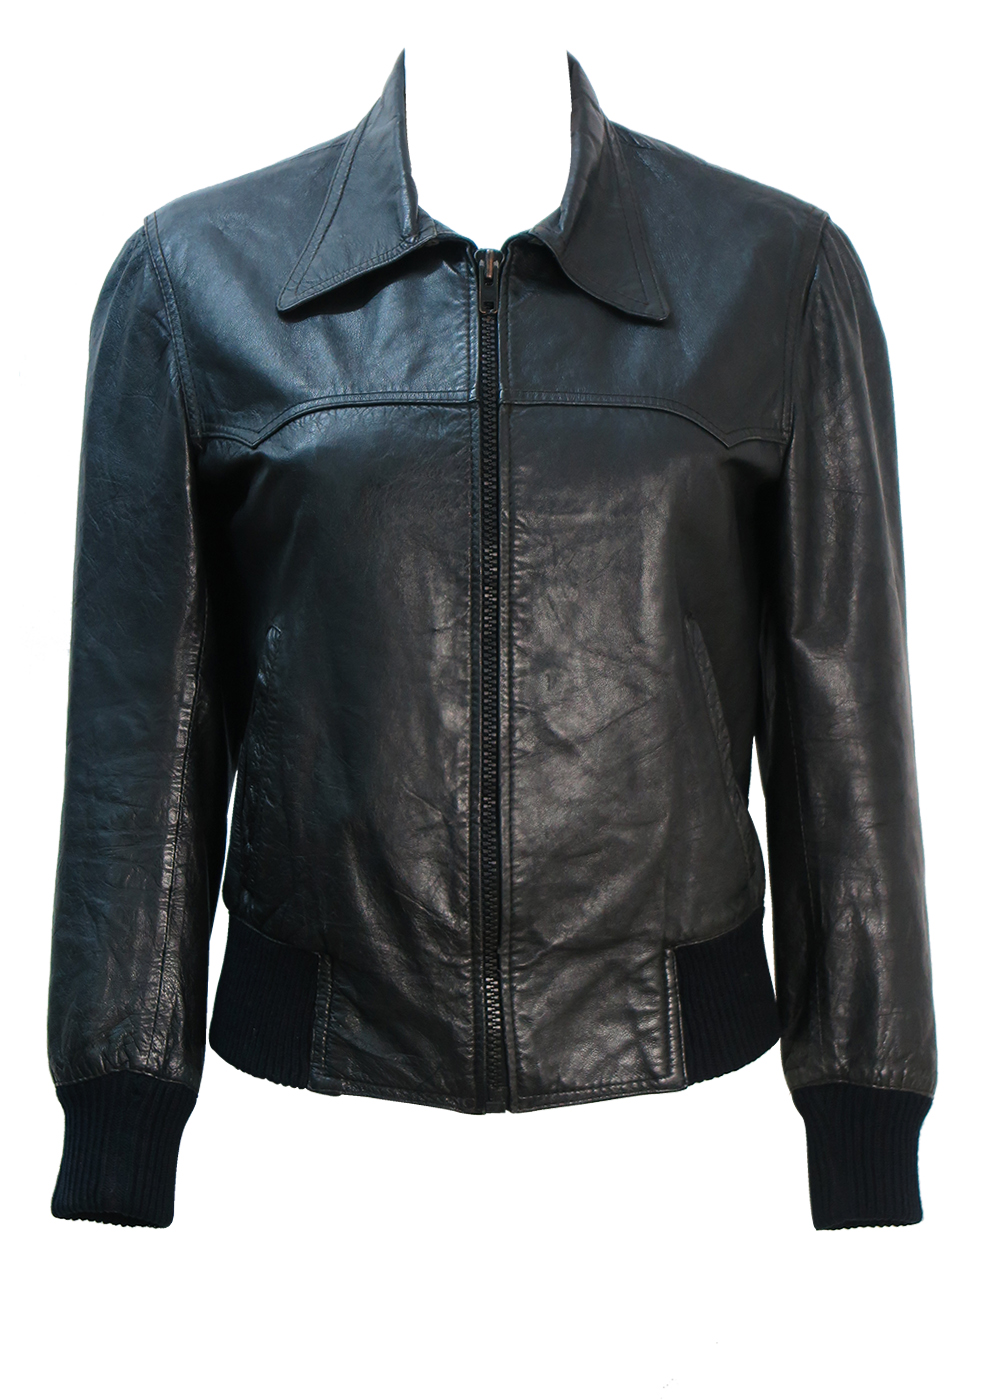 70s vintage leather jacket